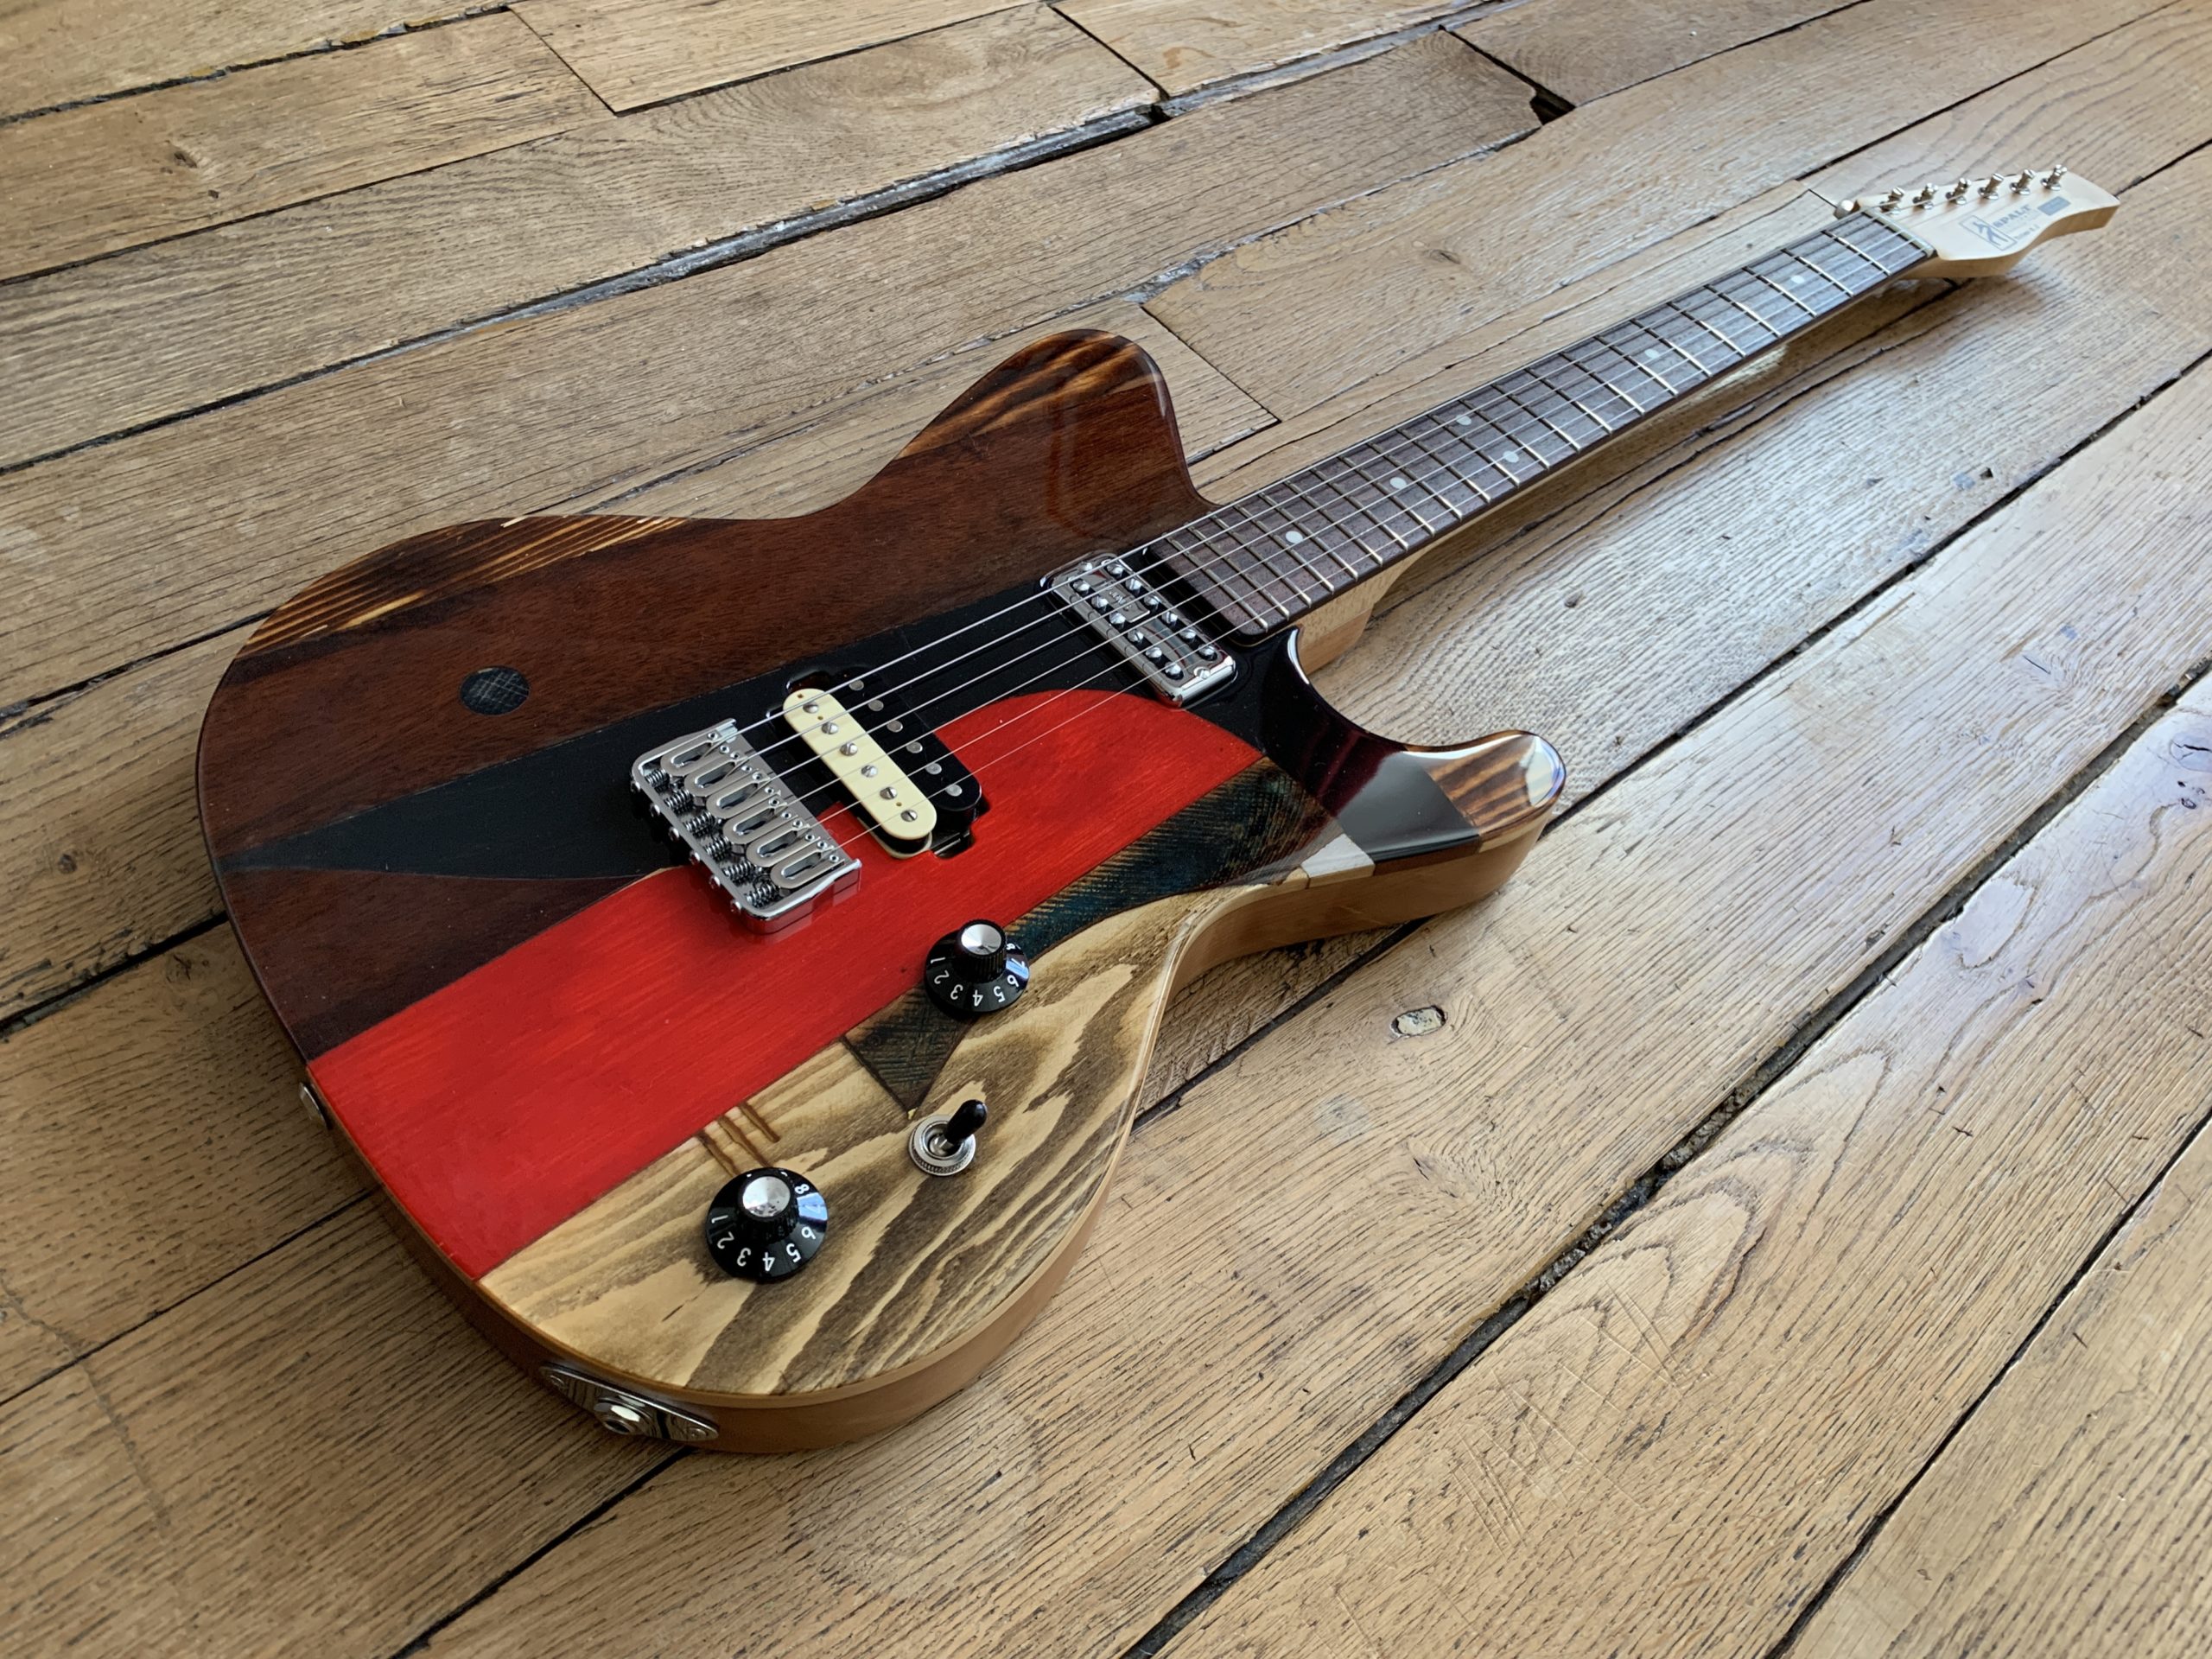 Totem X.2 X7 Spalt Instruments, a superb guitar built for great sounds!